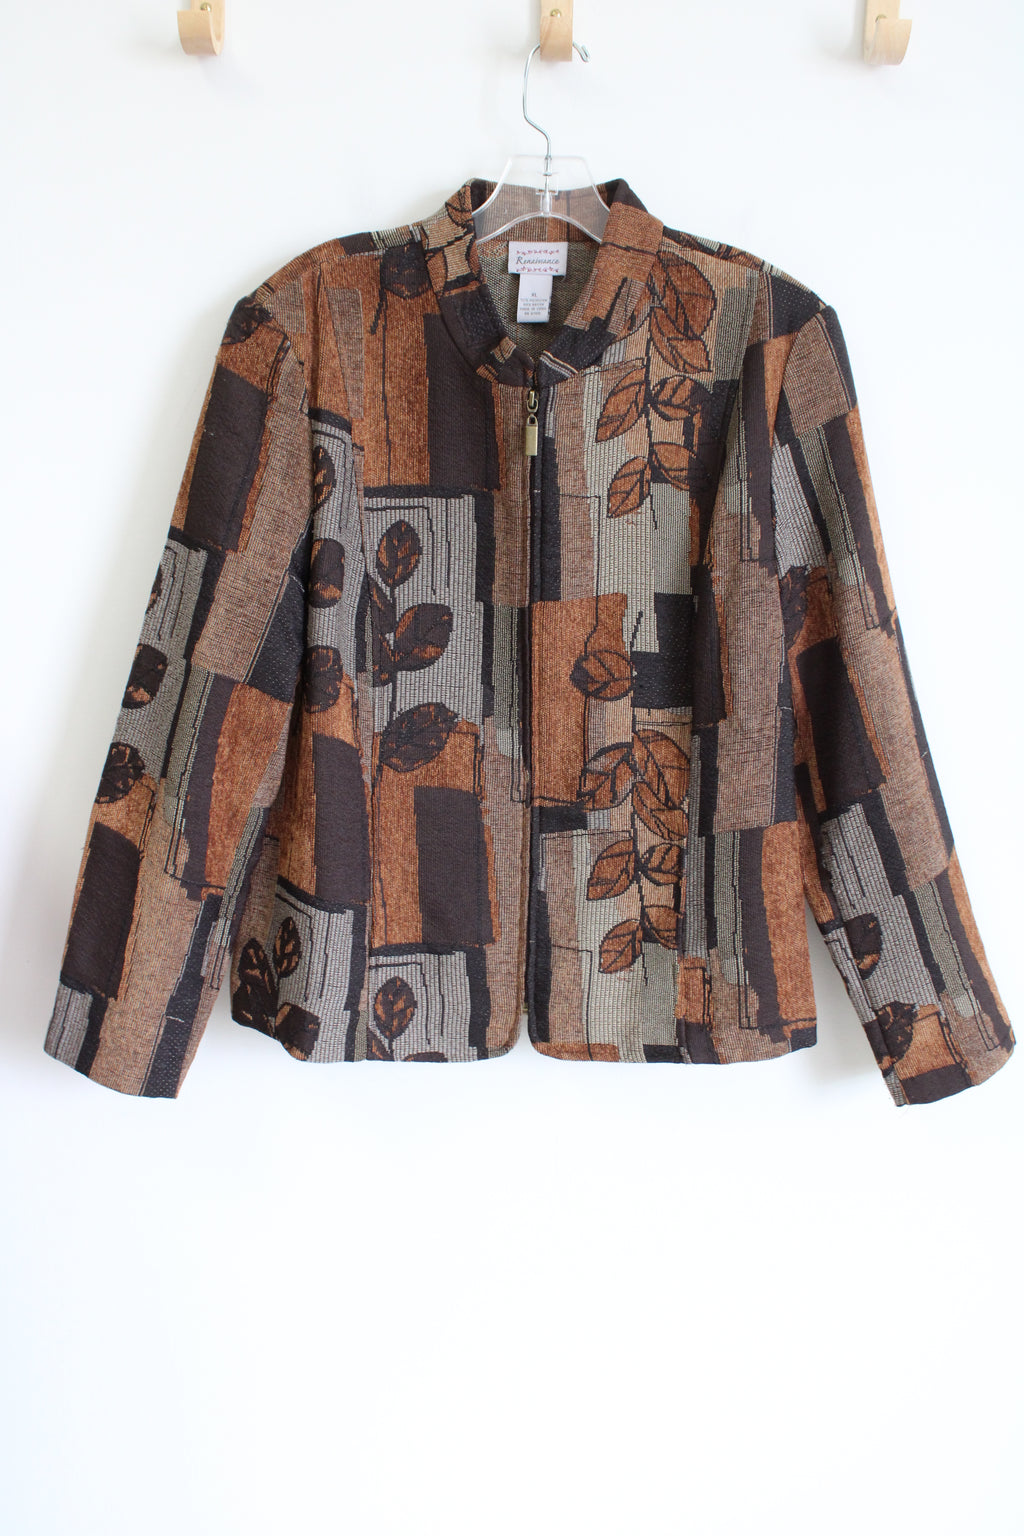 Renaissance Leaf Patterned Textured Brown Zip Up Jacket | XL